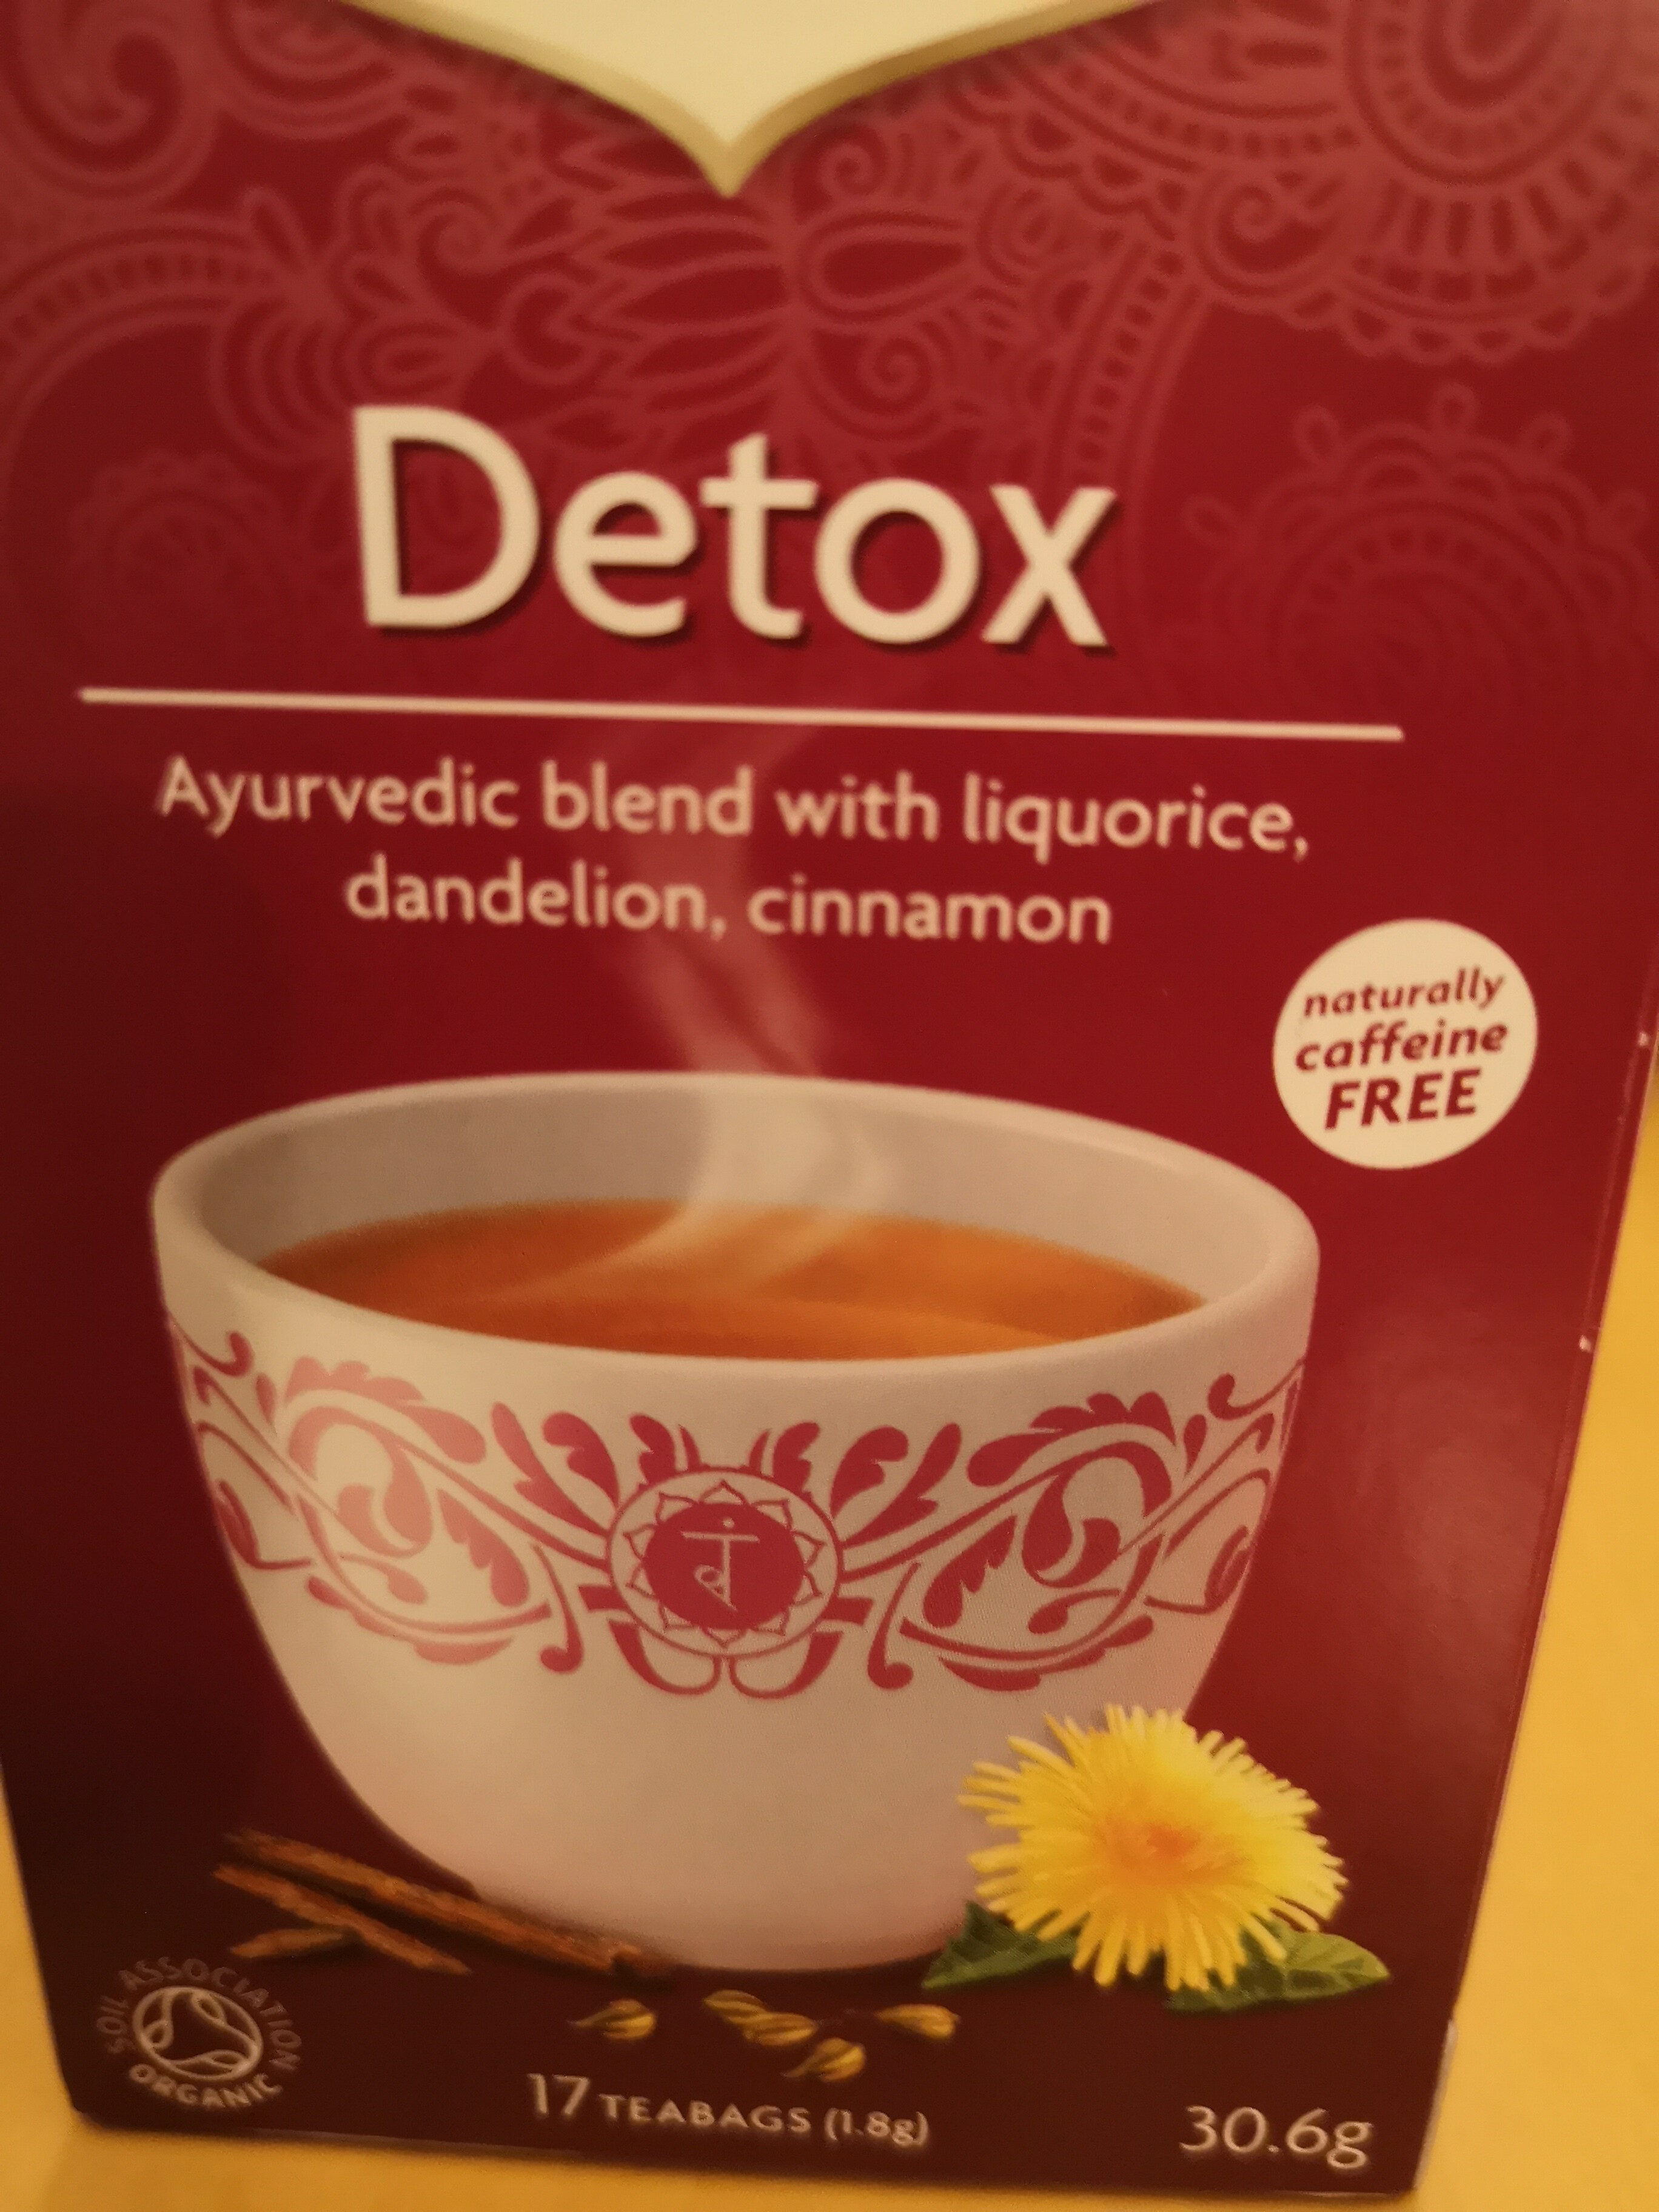 Detox - Ingredients